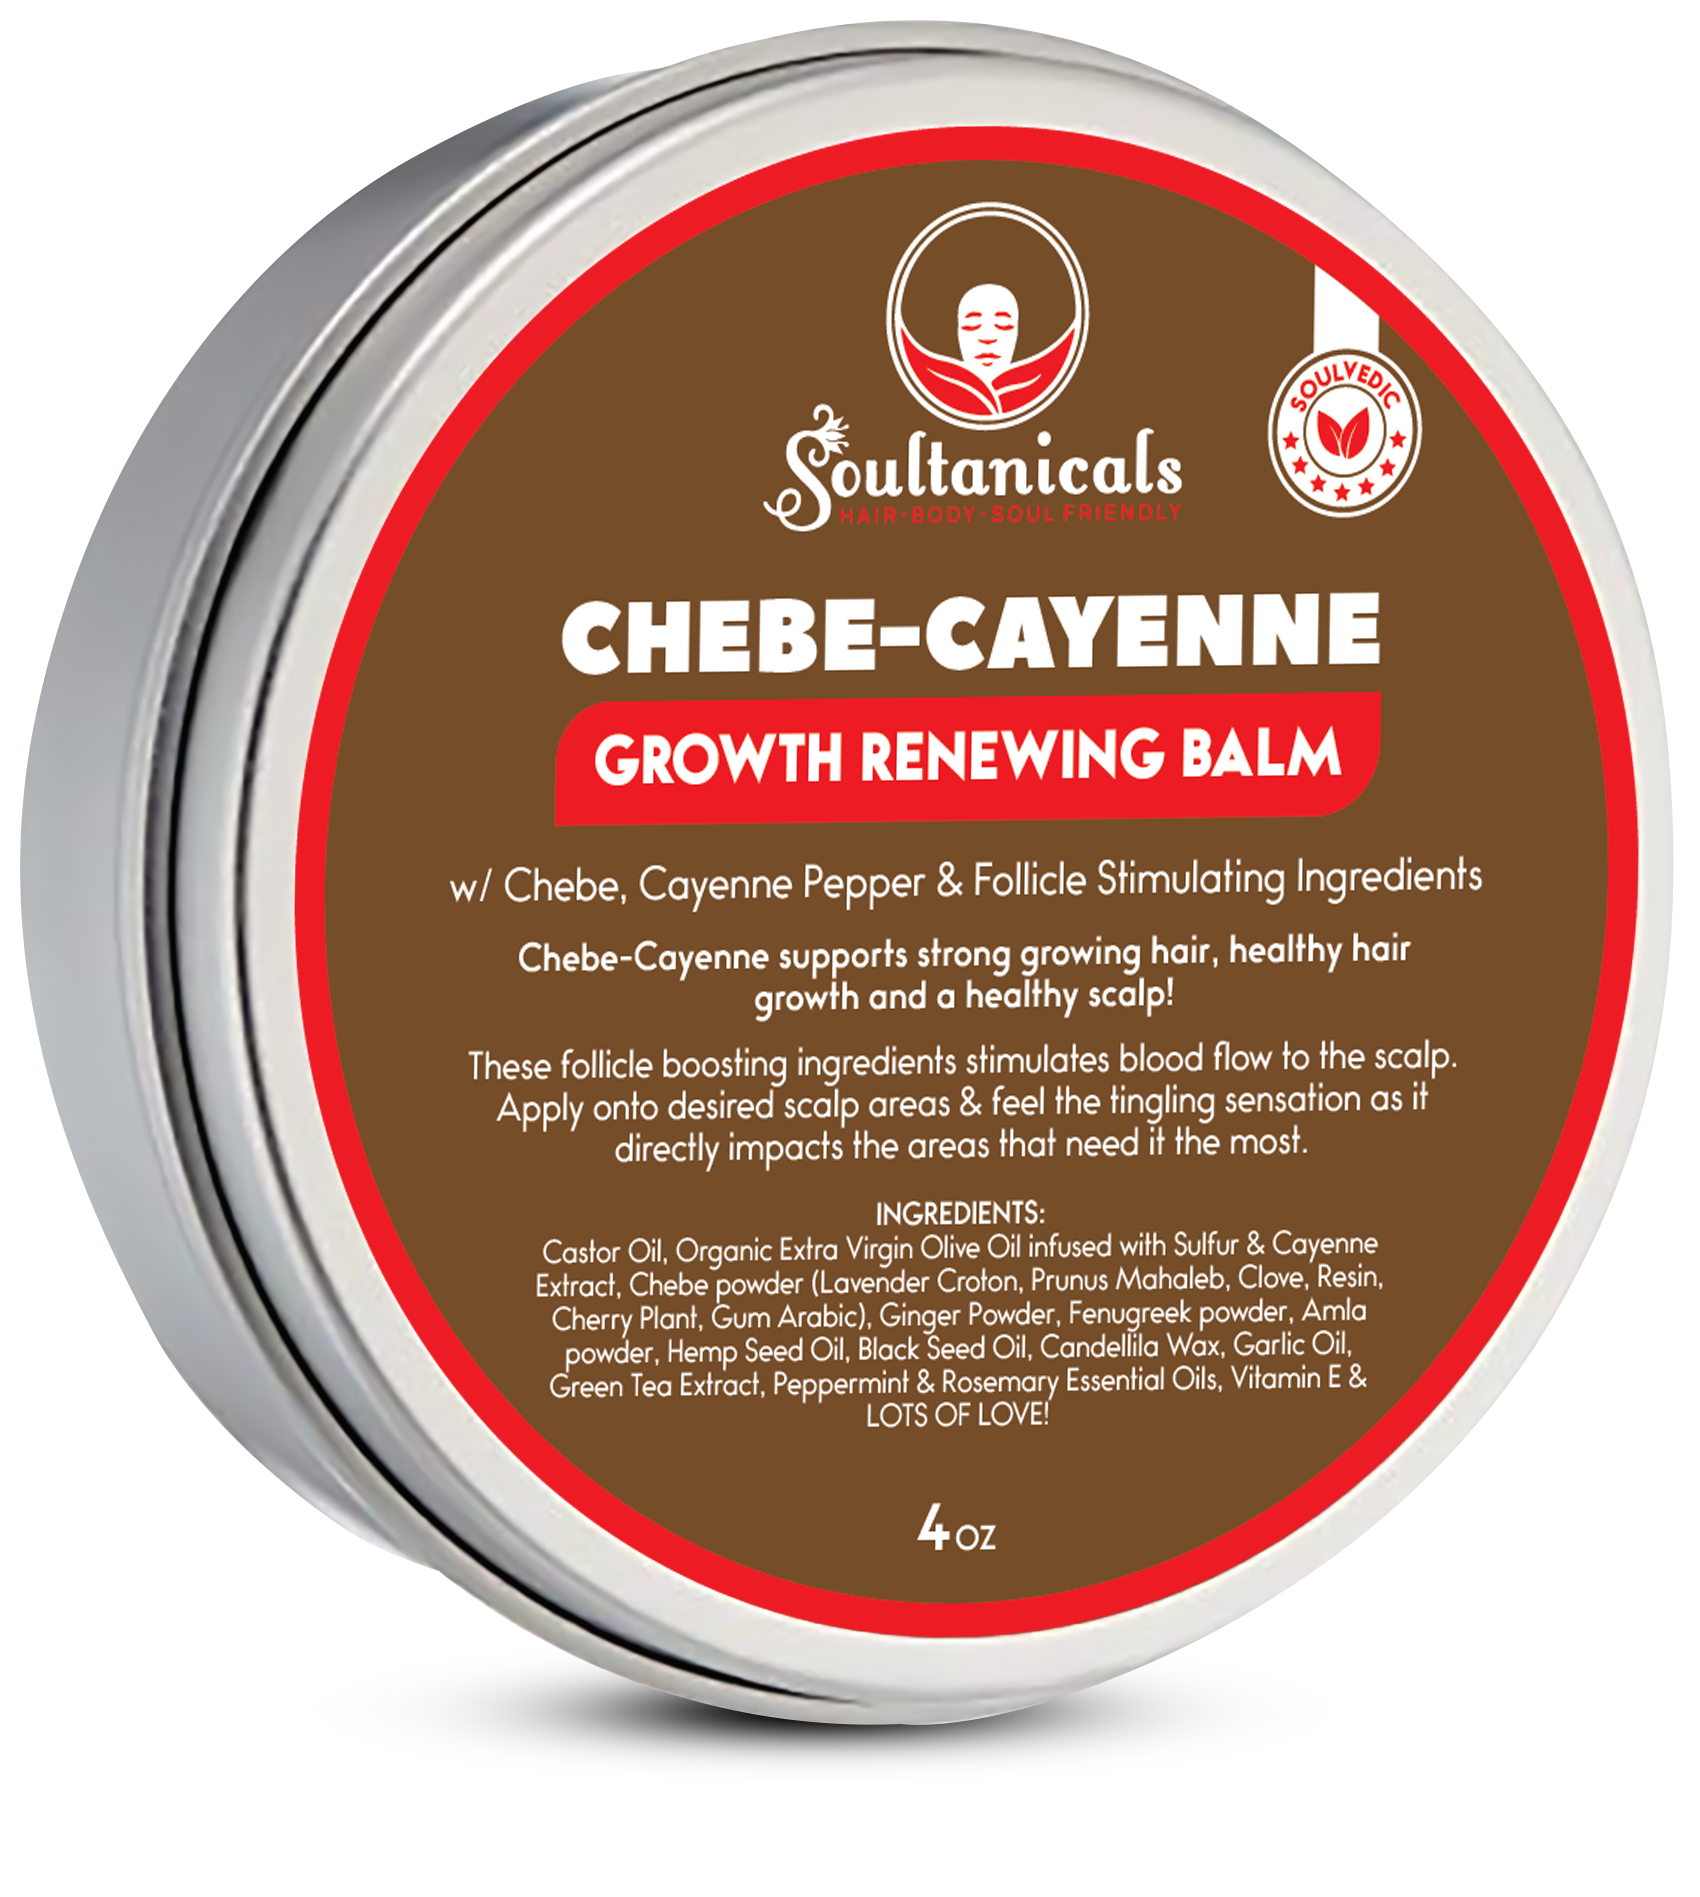 Chebe-Cayenne Growth Renewing Balm